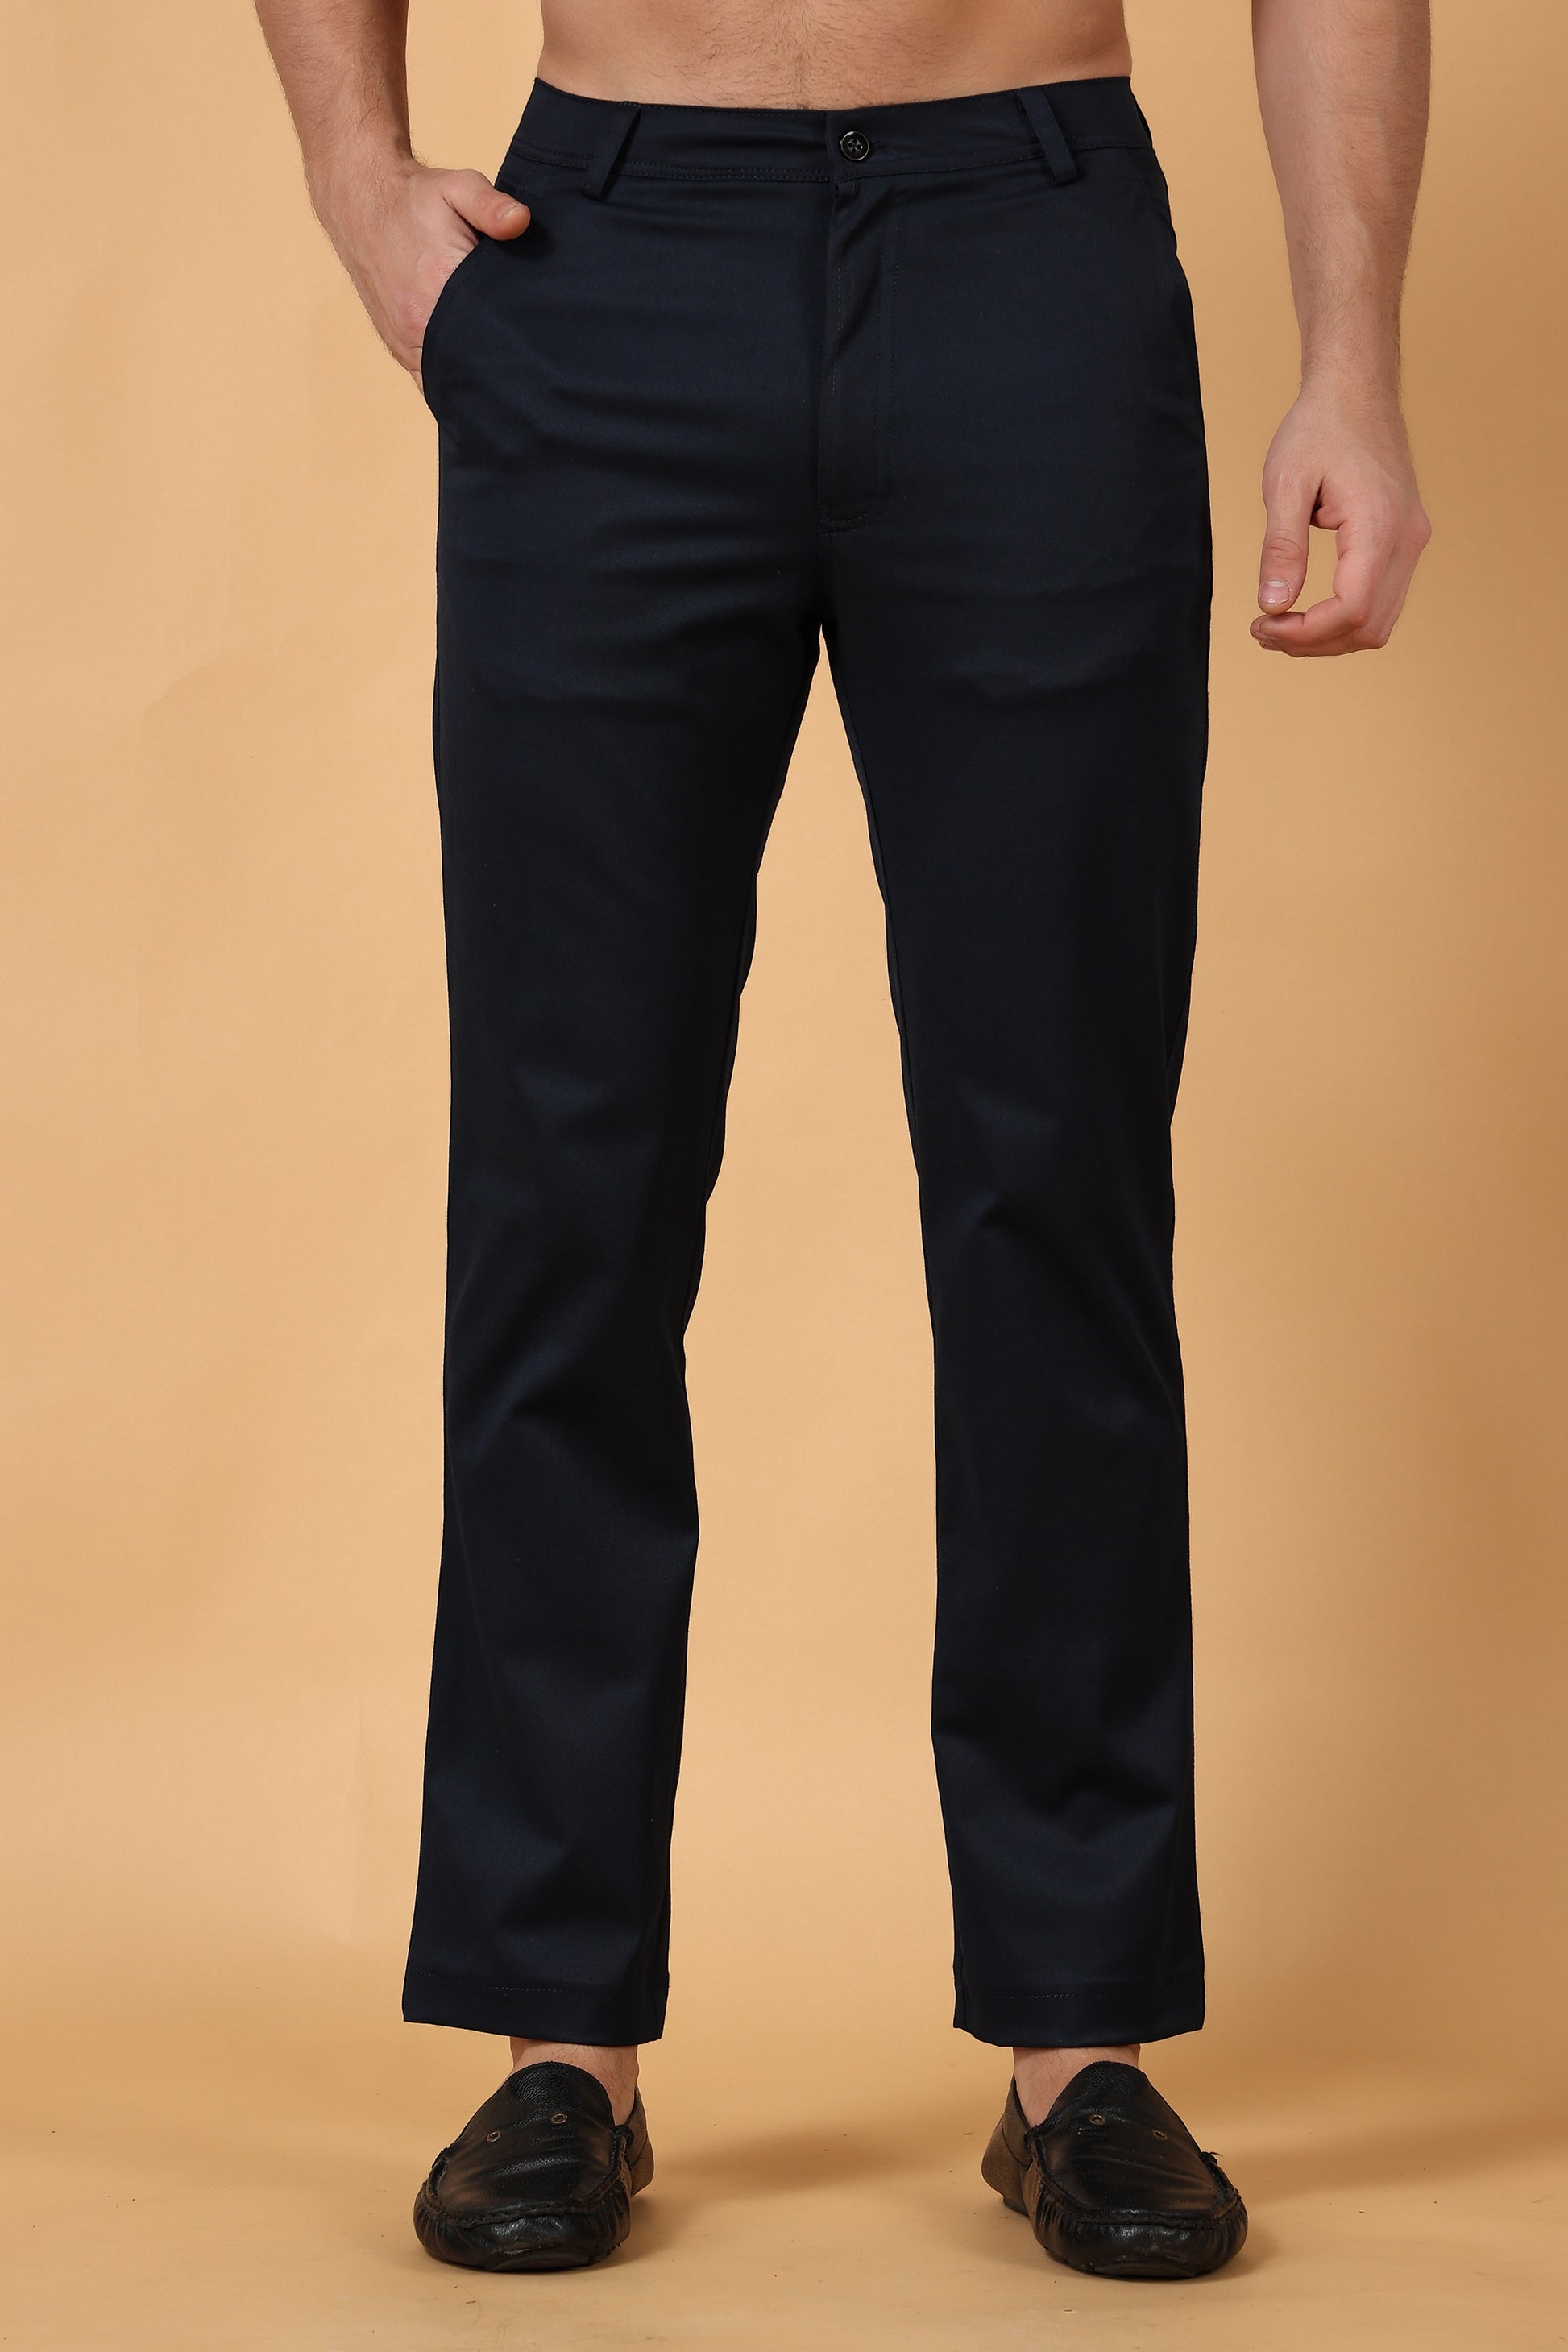 Men's Plus Size Navy Blue Cotton Lycra Chinos | Apella